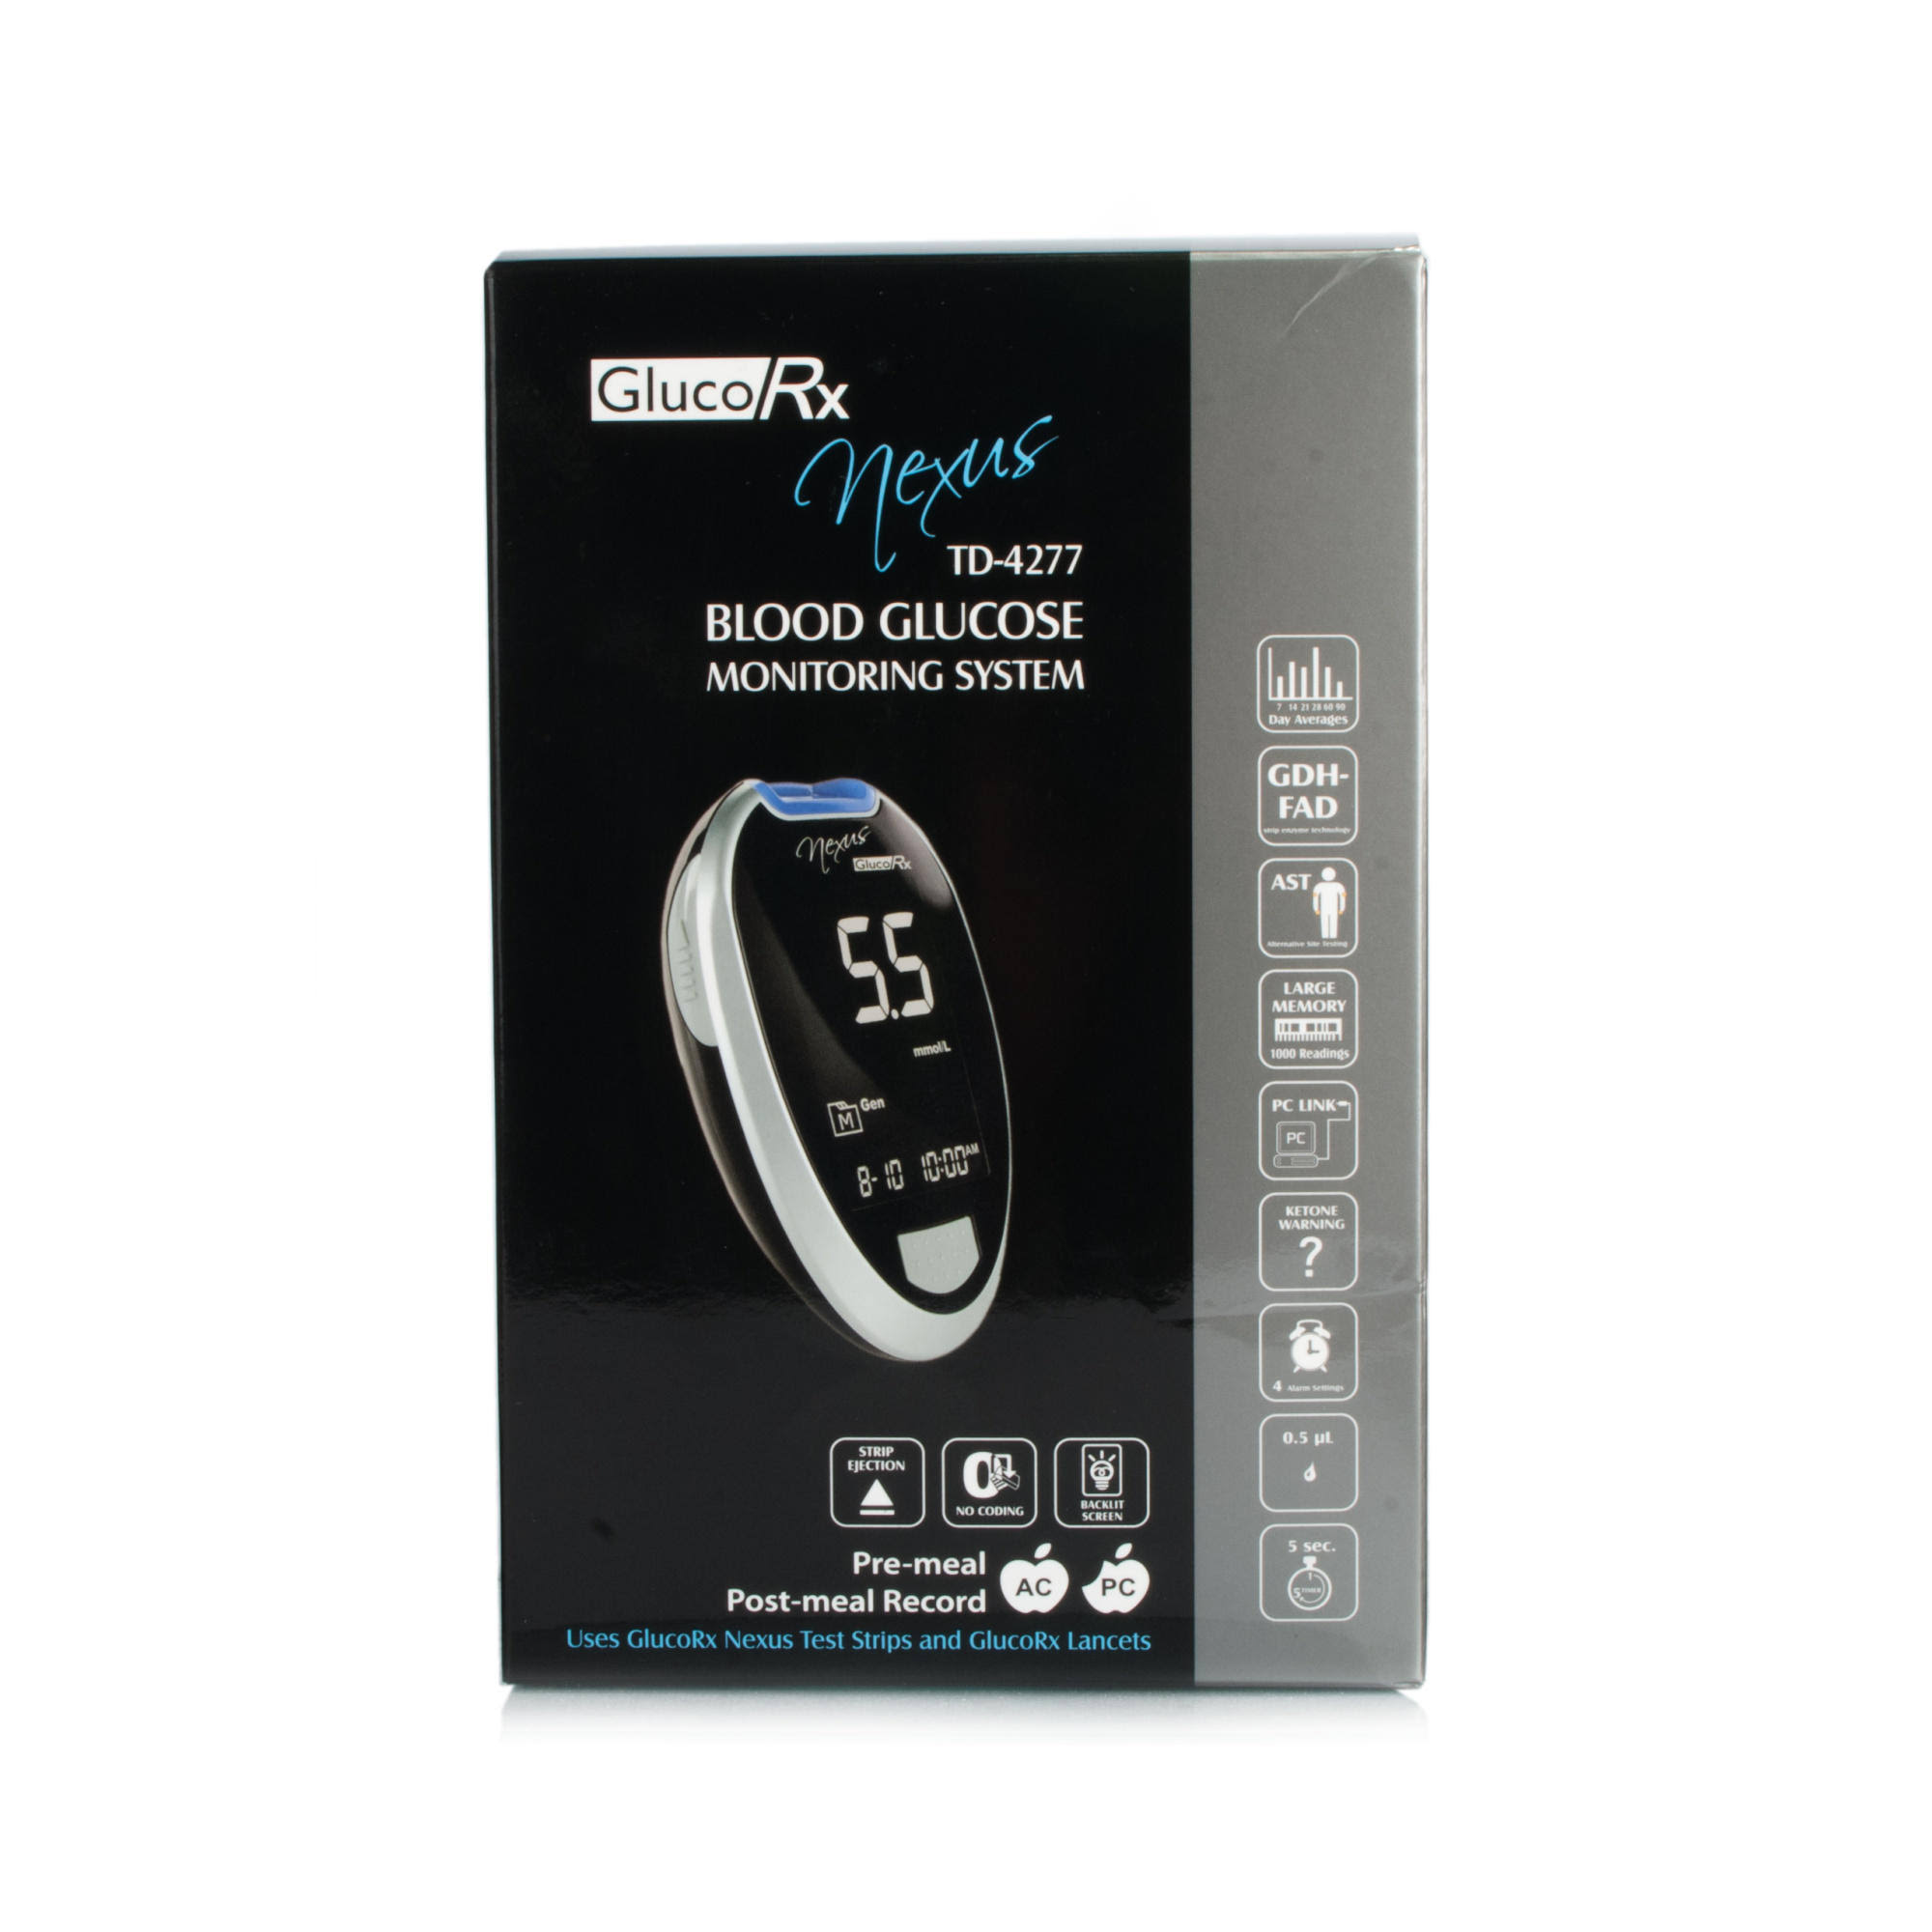 GlucoRx Nexus Blood Glucose Monitoring System Kit